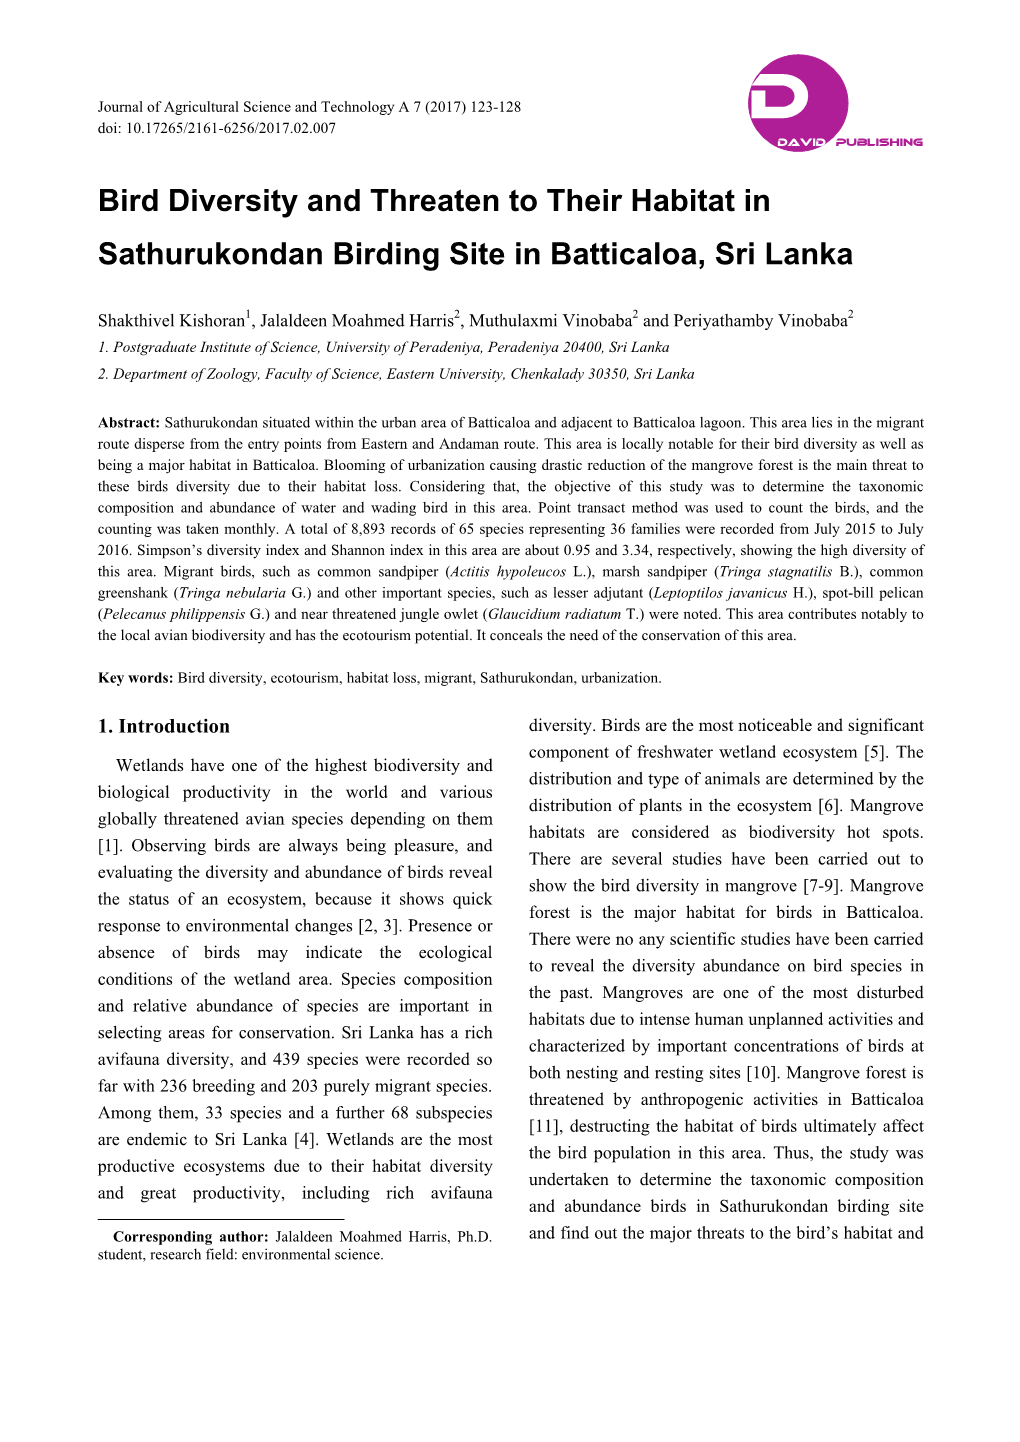 Bird Diversity and Threaten to Their Habitat in Sathurukondan Birding Site in Batticaloa, Sri Lanka